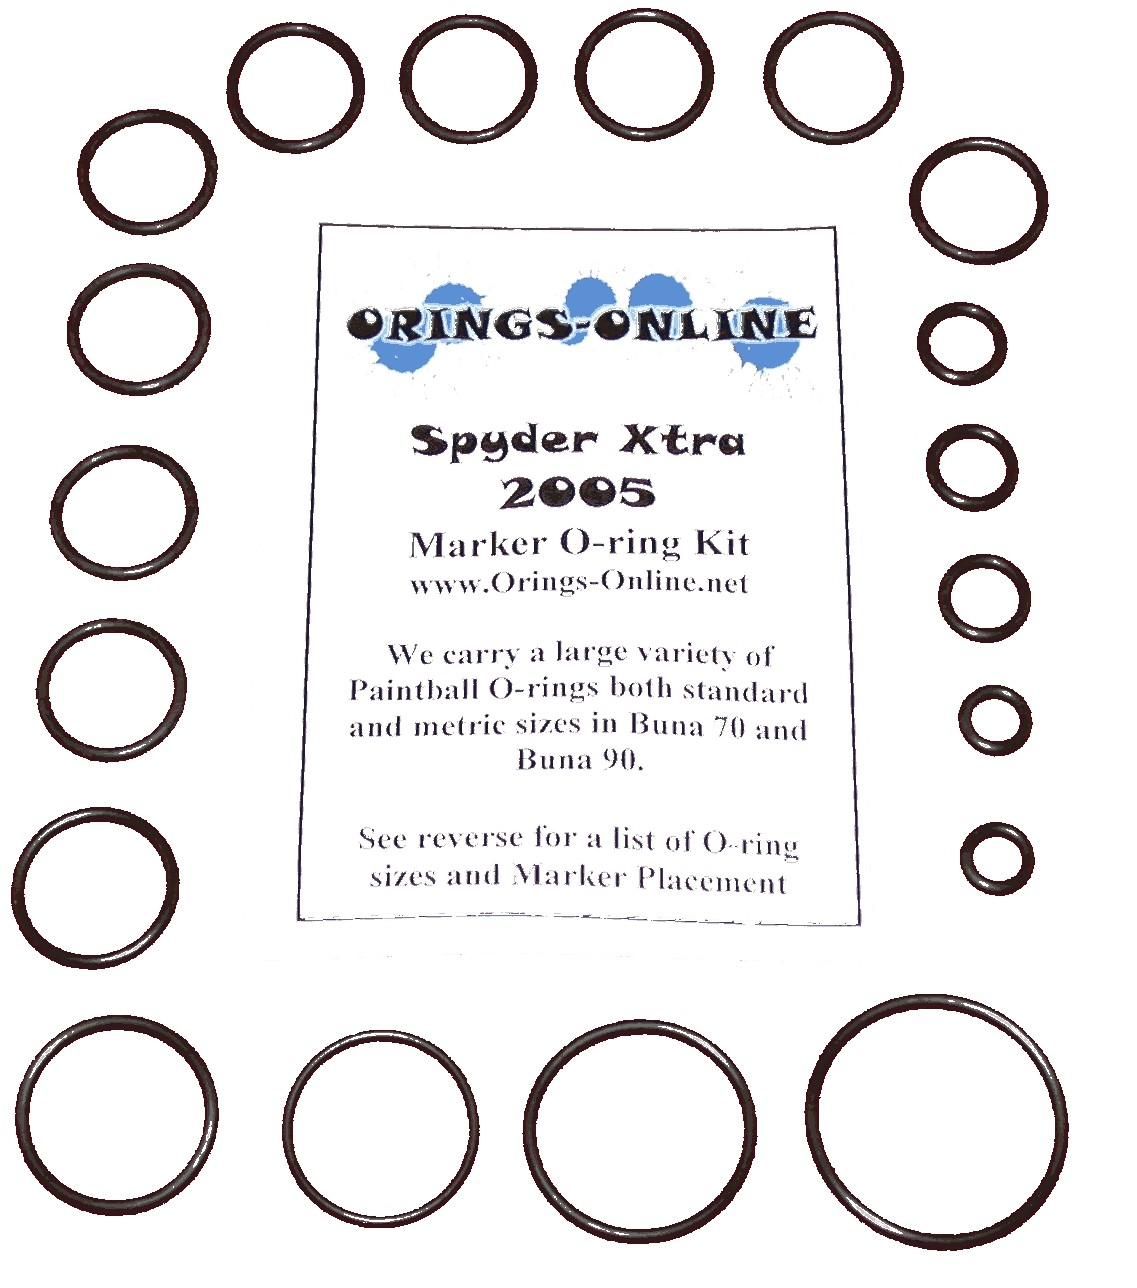 kits Spyder Victor 2007 Paintball Marker O-ring Oring Kit x 4 rebuilds 